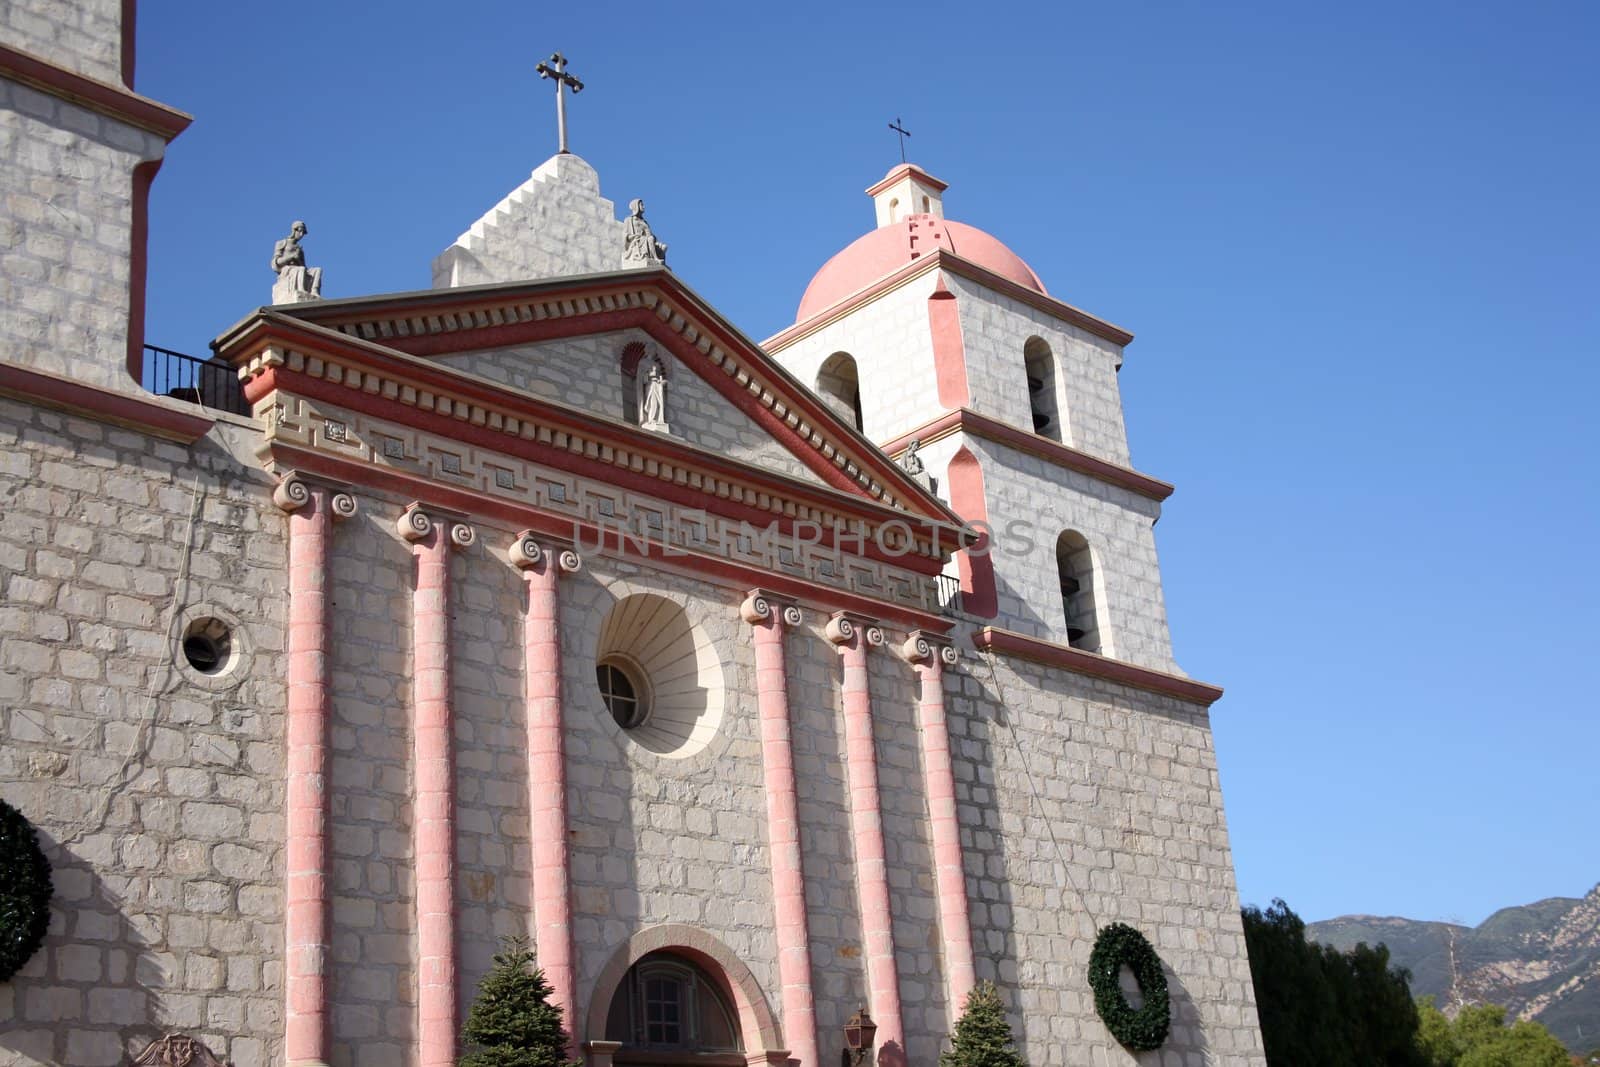 Beautiful picture of the Santa Barbara Mission in California